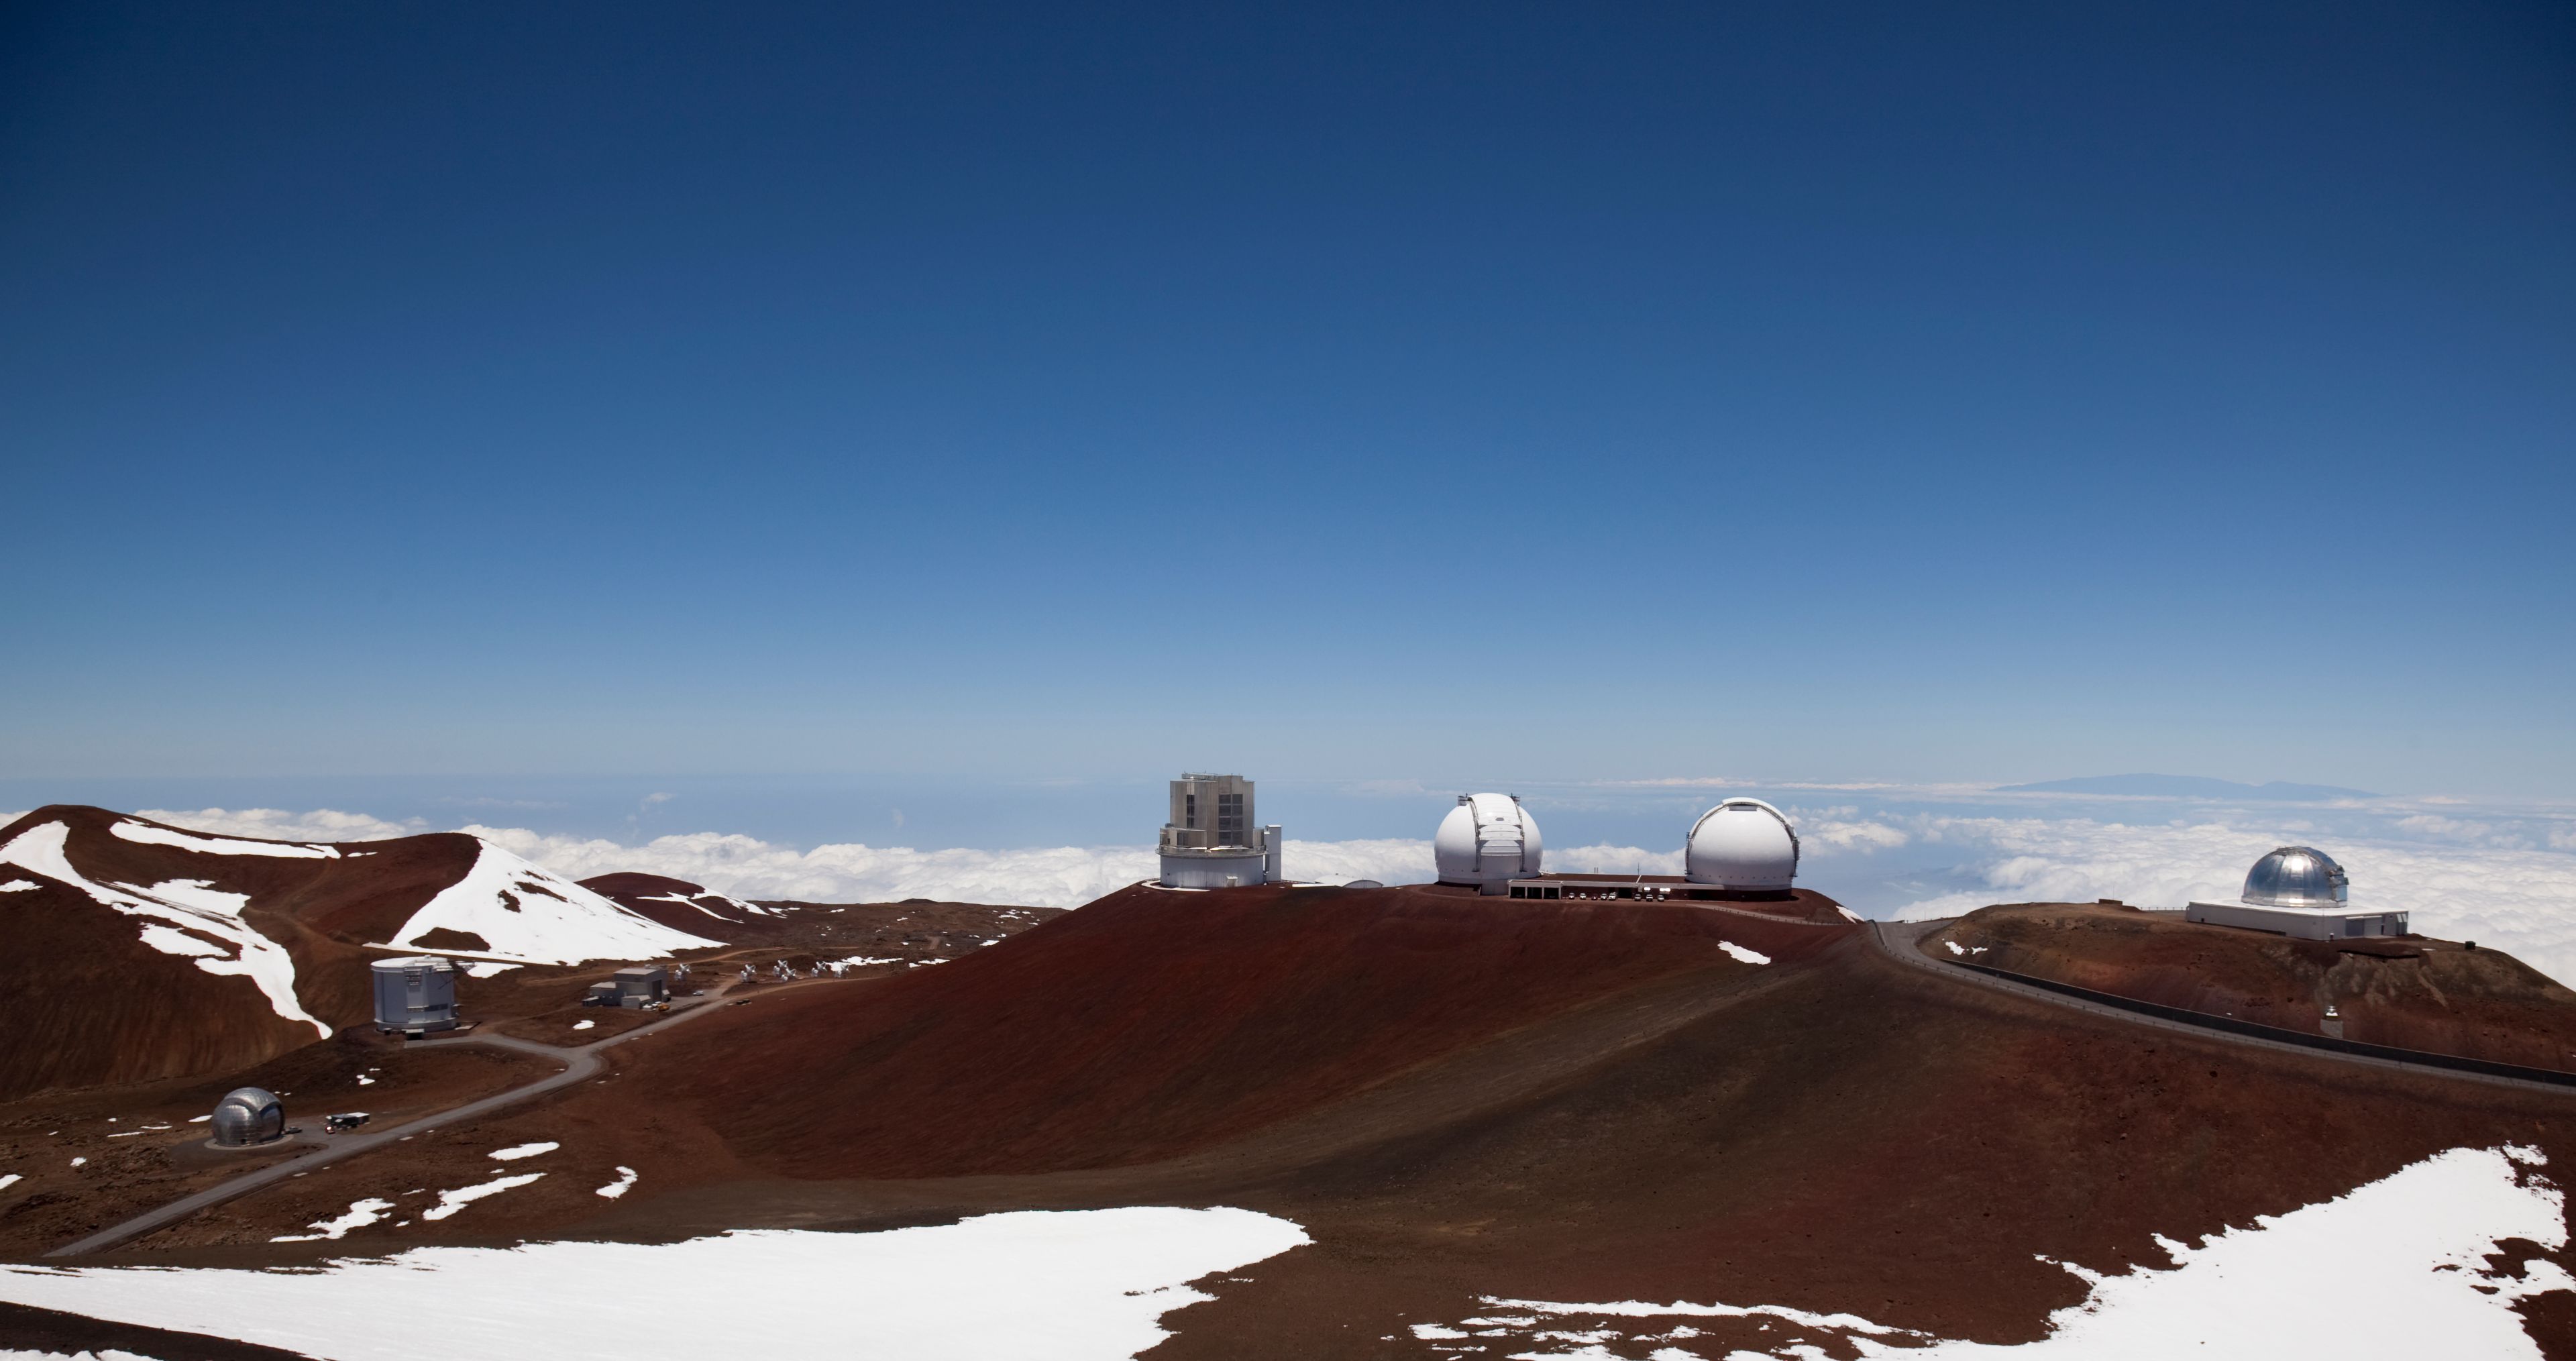 Snow and Telescopes on Mauna Kea in Hawaii